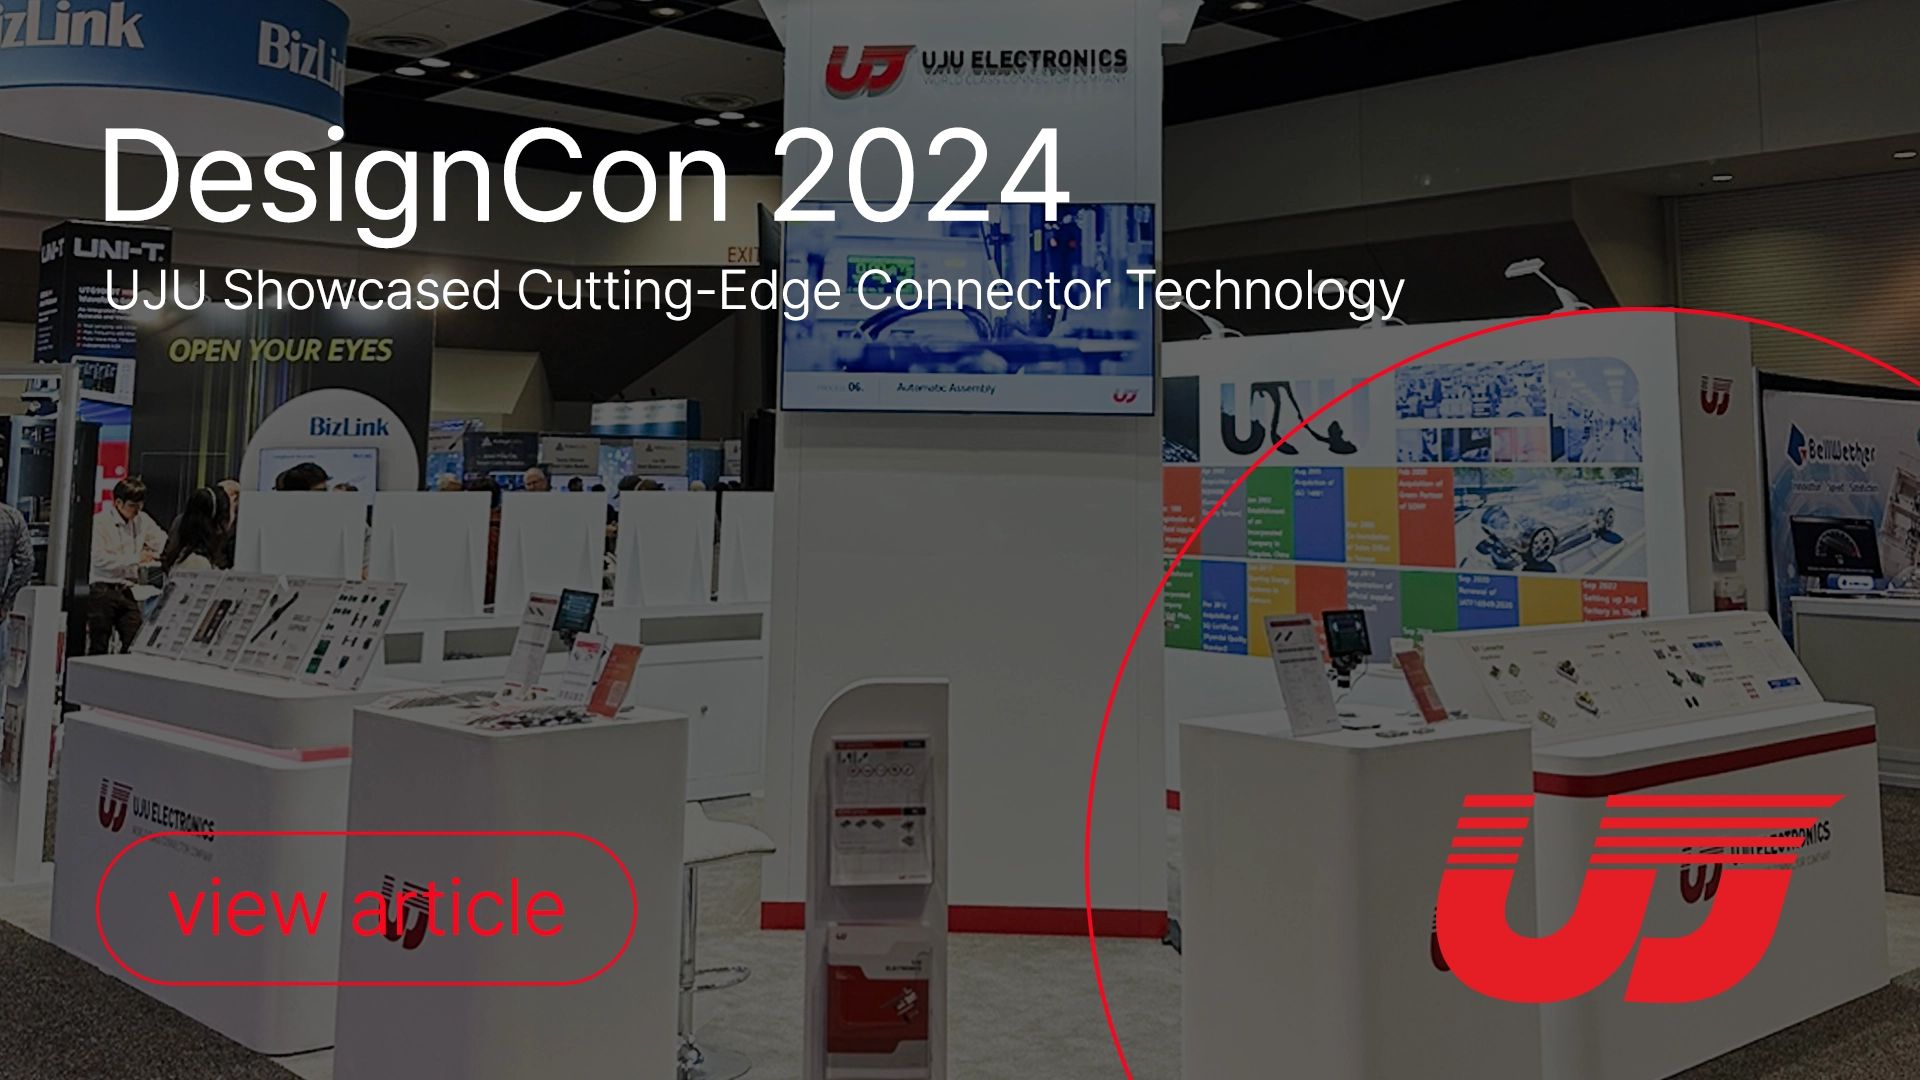 UJU Electronics Showcased Cutting-Edge Connector Technology at DesignCon 2024